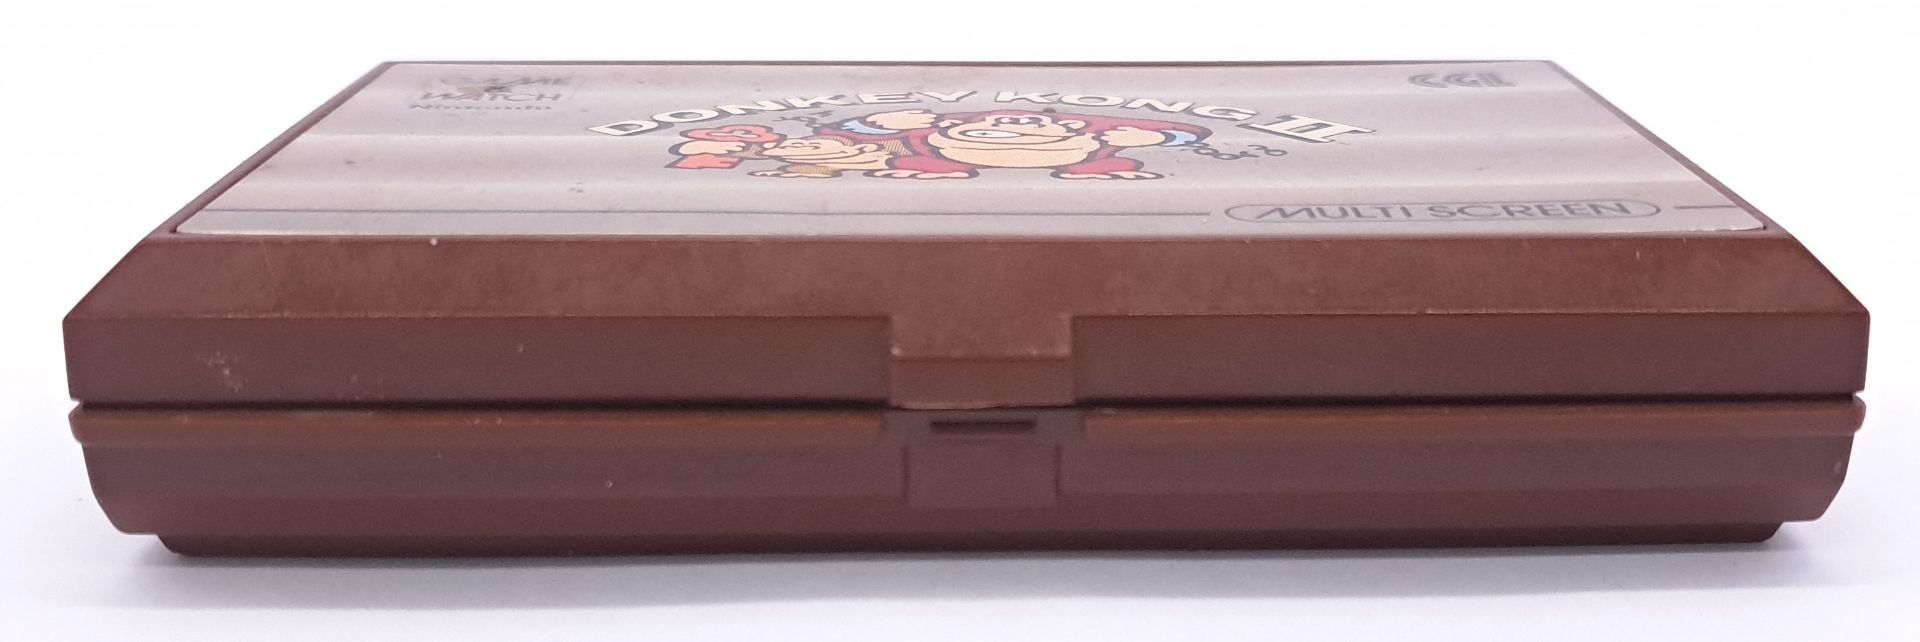 Vintage/Retro Gaming. Nintendo Game & Watch unboxed JR-55 “Donkey Kong II” - Bild 7 aus 10